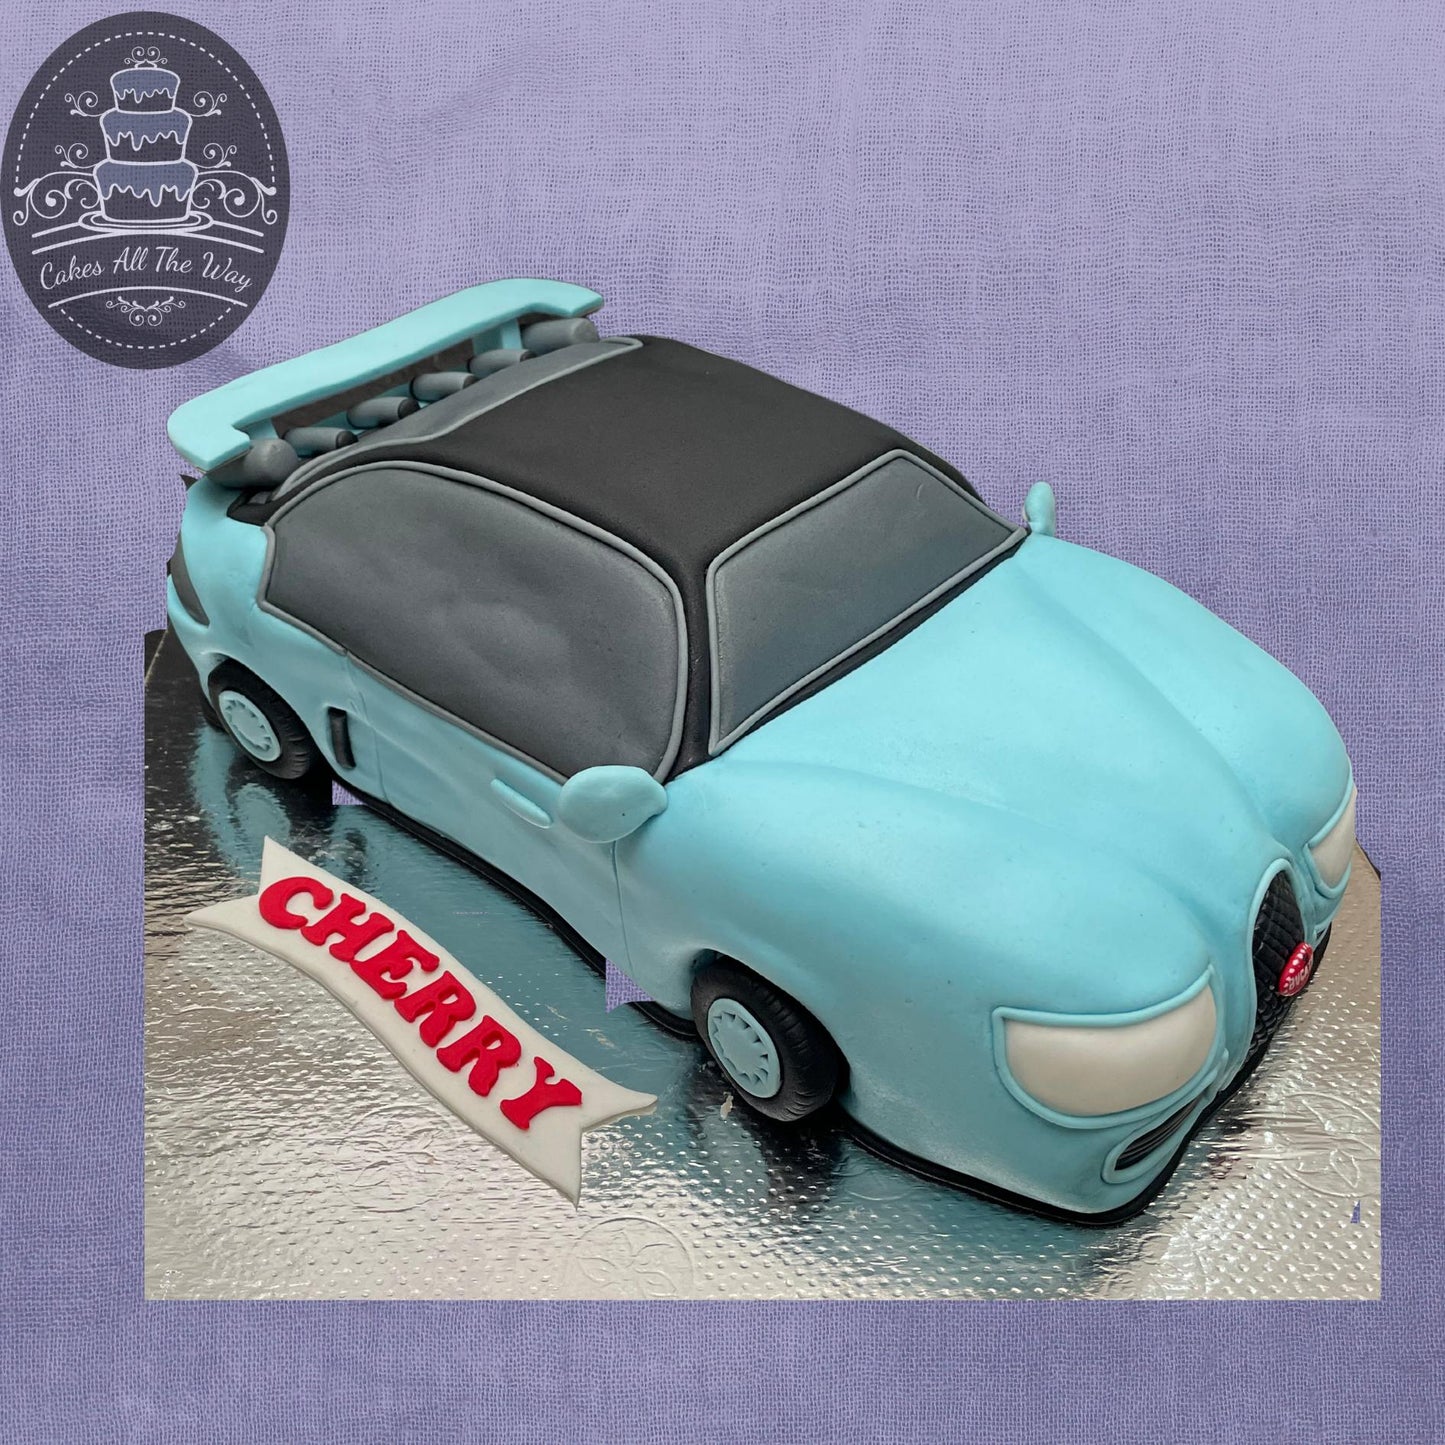 Sports Car Theme Cake